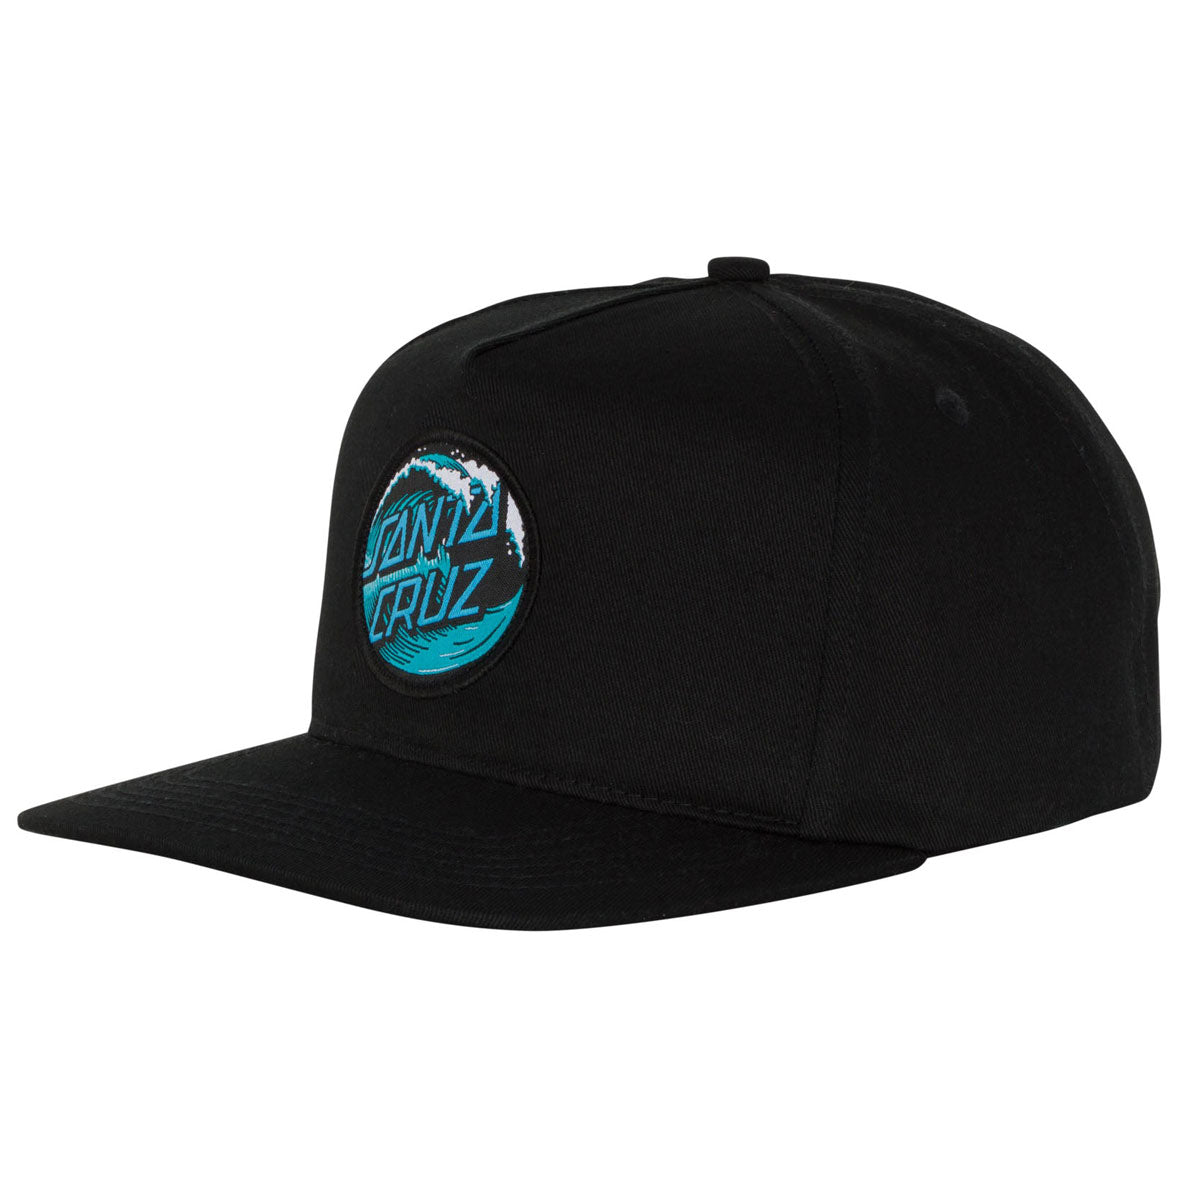 Santa Cruz Wave Dot Snapback Hat - Black image 1